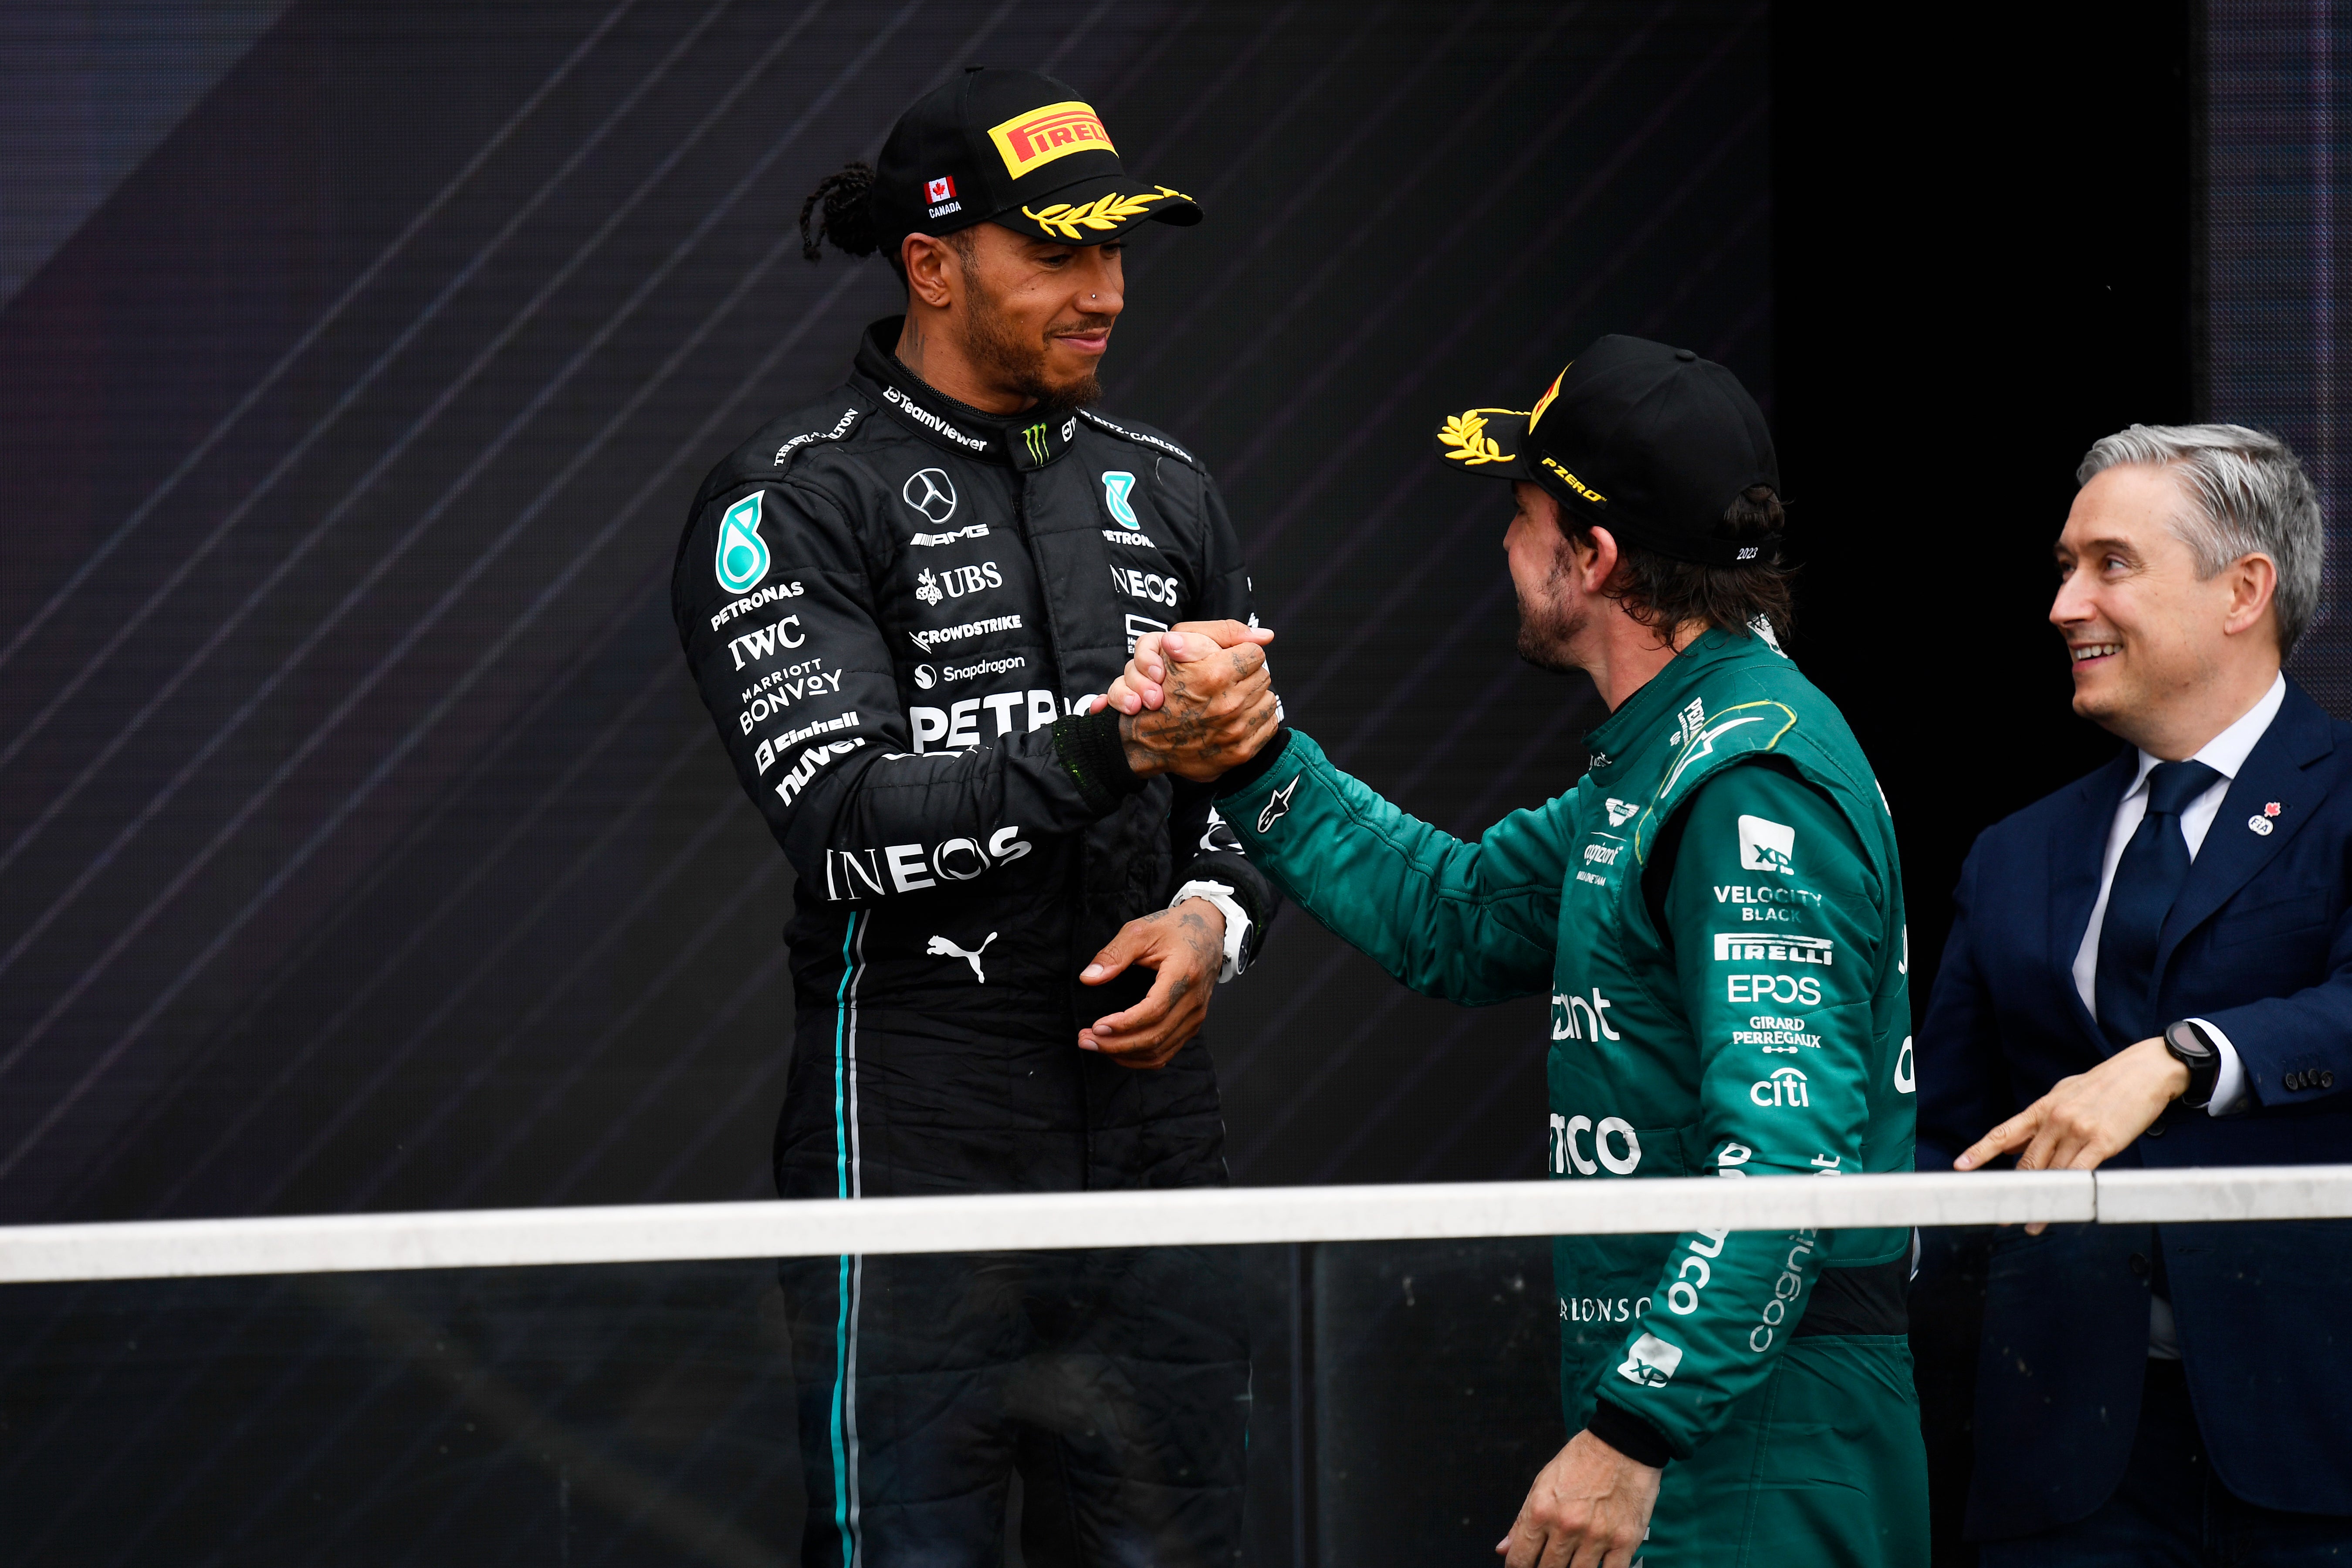 Neither Fernando Alonso nor Lewis Hamilton saw their future with Mercedes